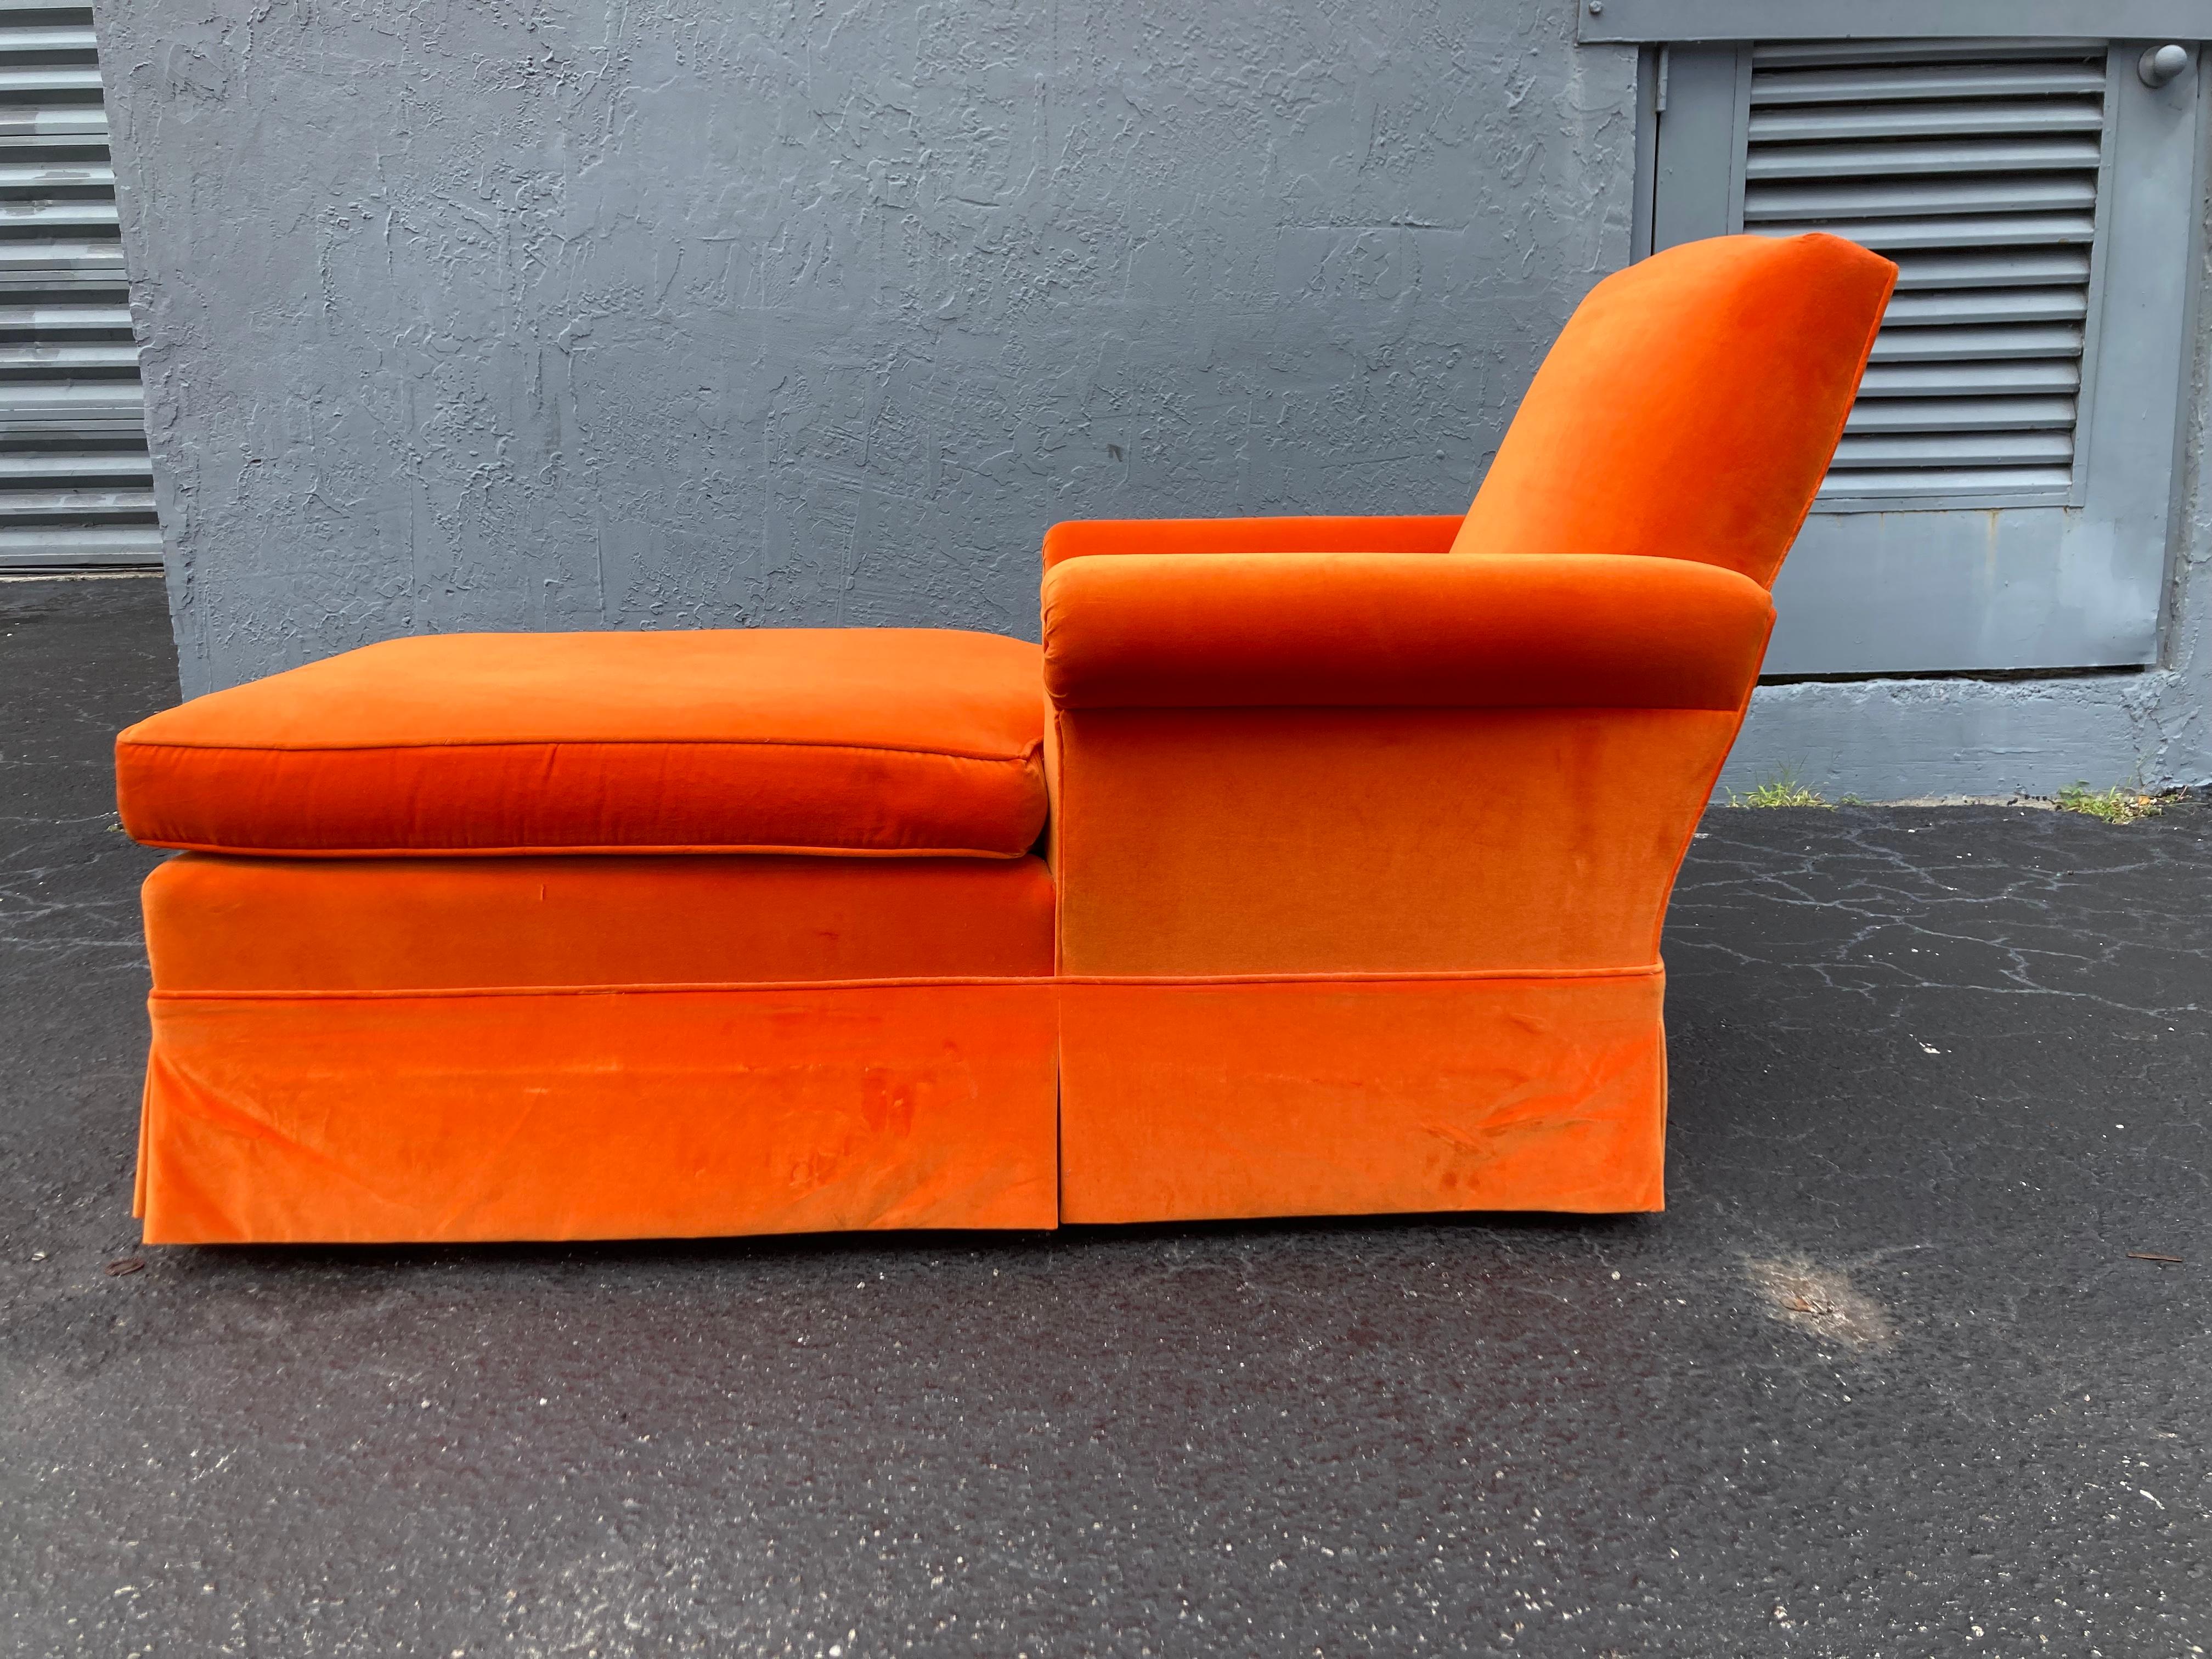 Late 20th Century Modern Orange Chaise Longues Lounge